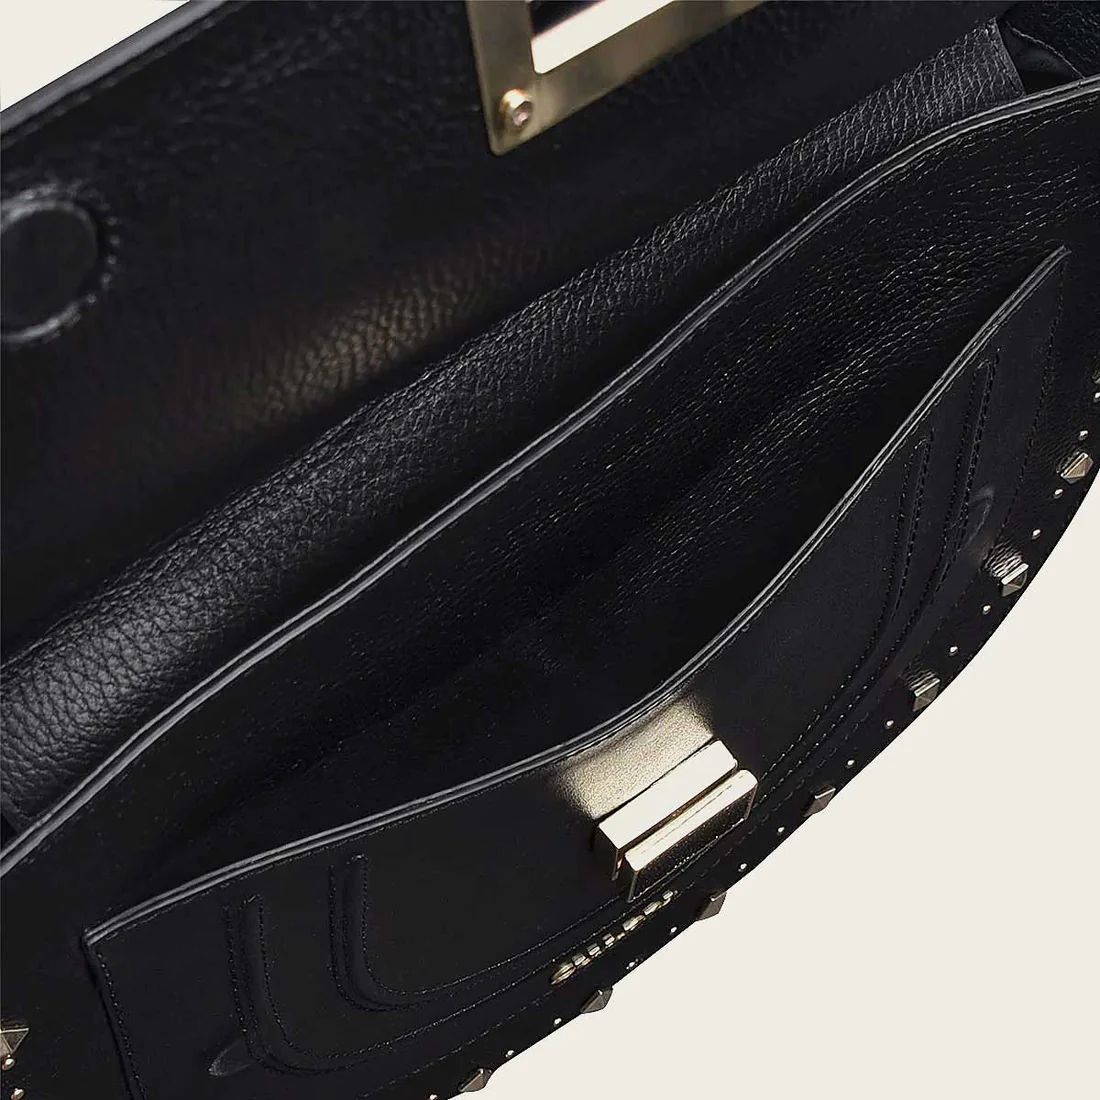 Cuadra | Black Genuine Stingray Leather Studs Handbag